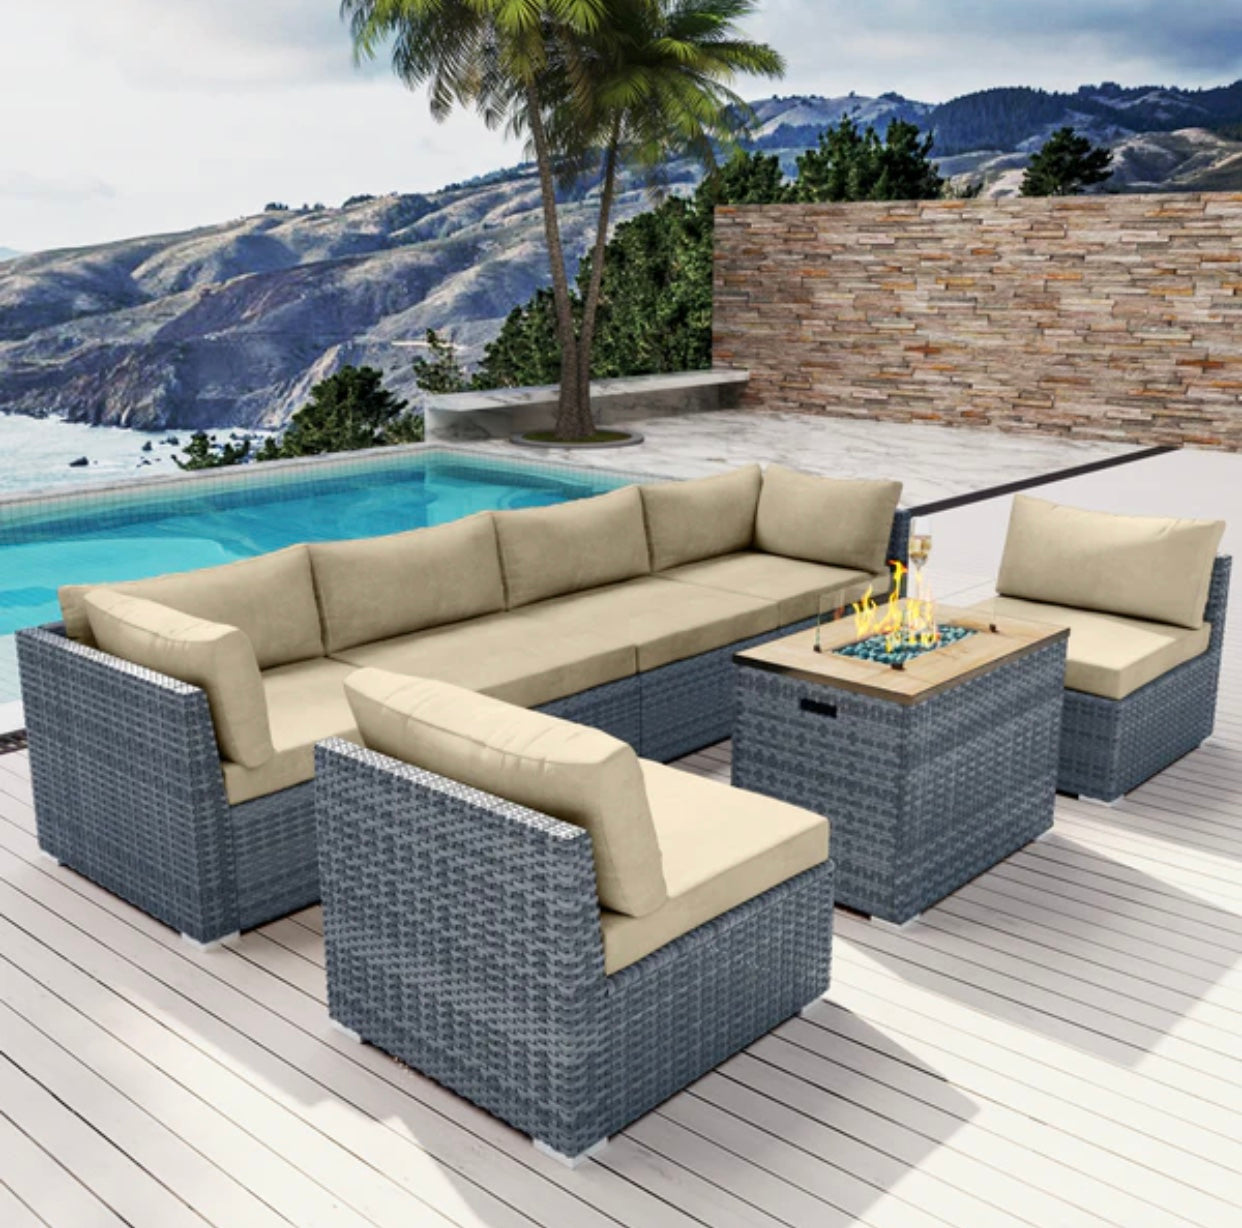 Khaki Light Beige 7 Seven piece Outdoor Patio Furniture with Propane Fire Pit Gray Wicker Santa Monica Beach